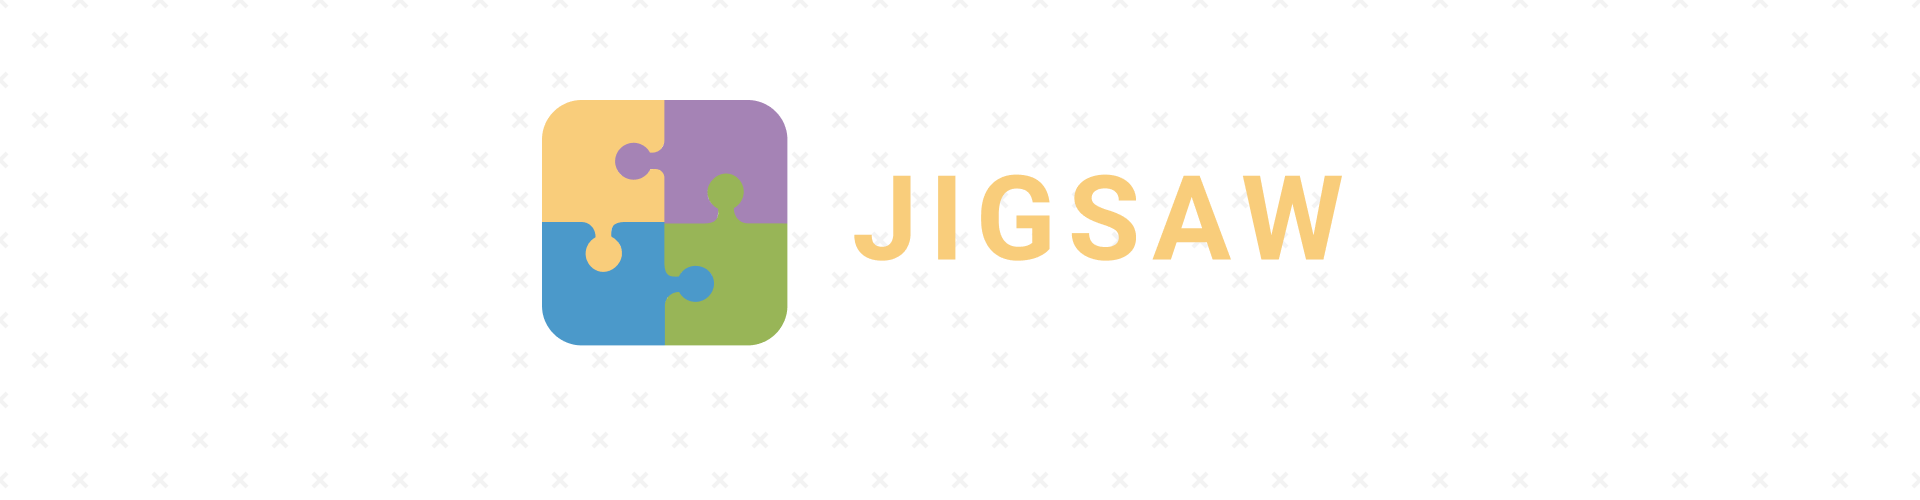 Jigsaw Blogpost Image